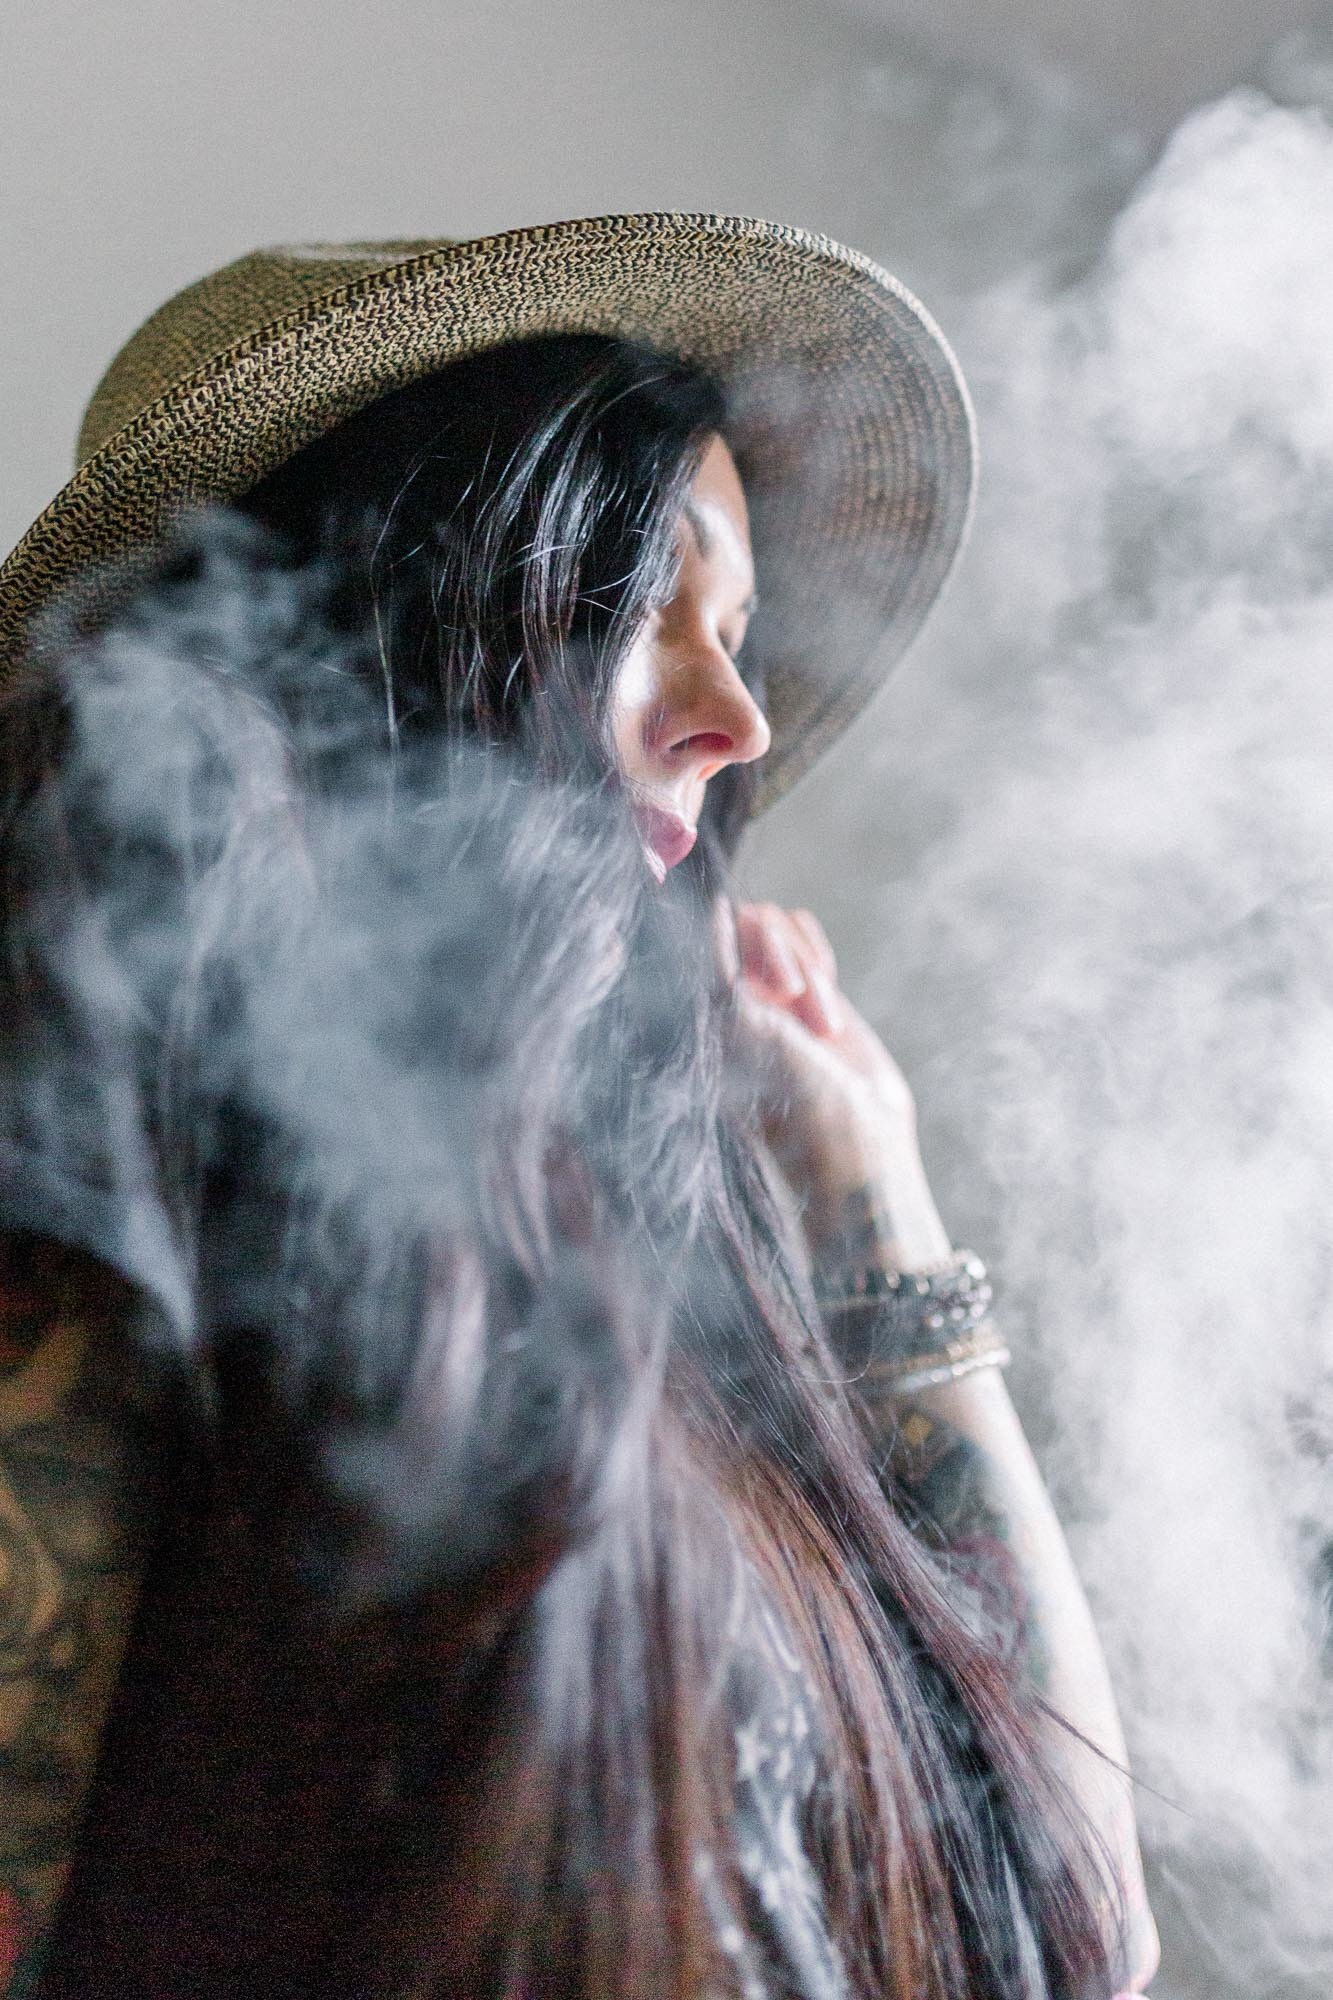 Smokey and artistic shot captured by Staci Addison Photography